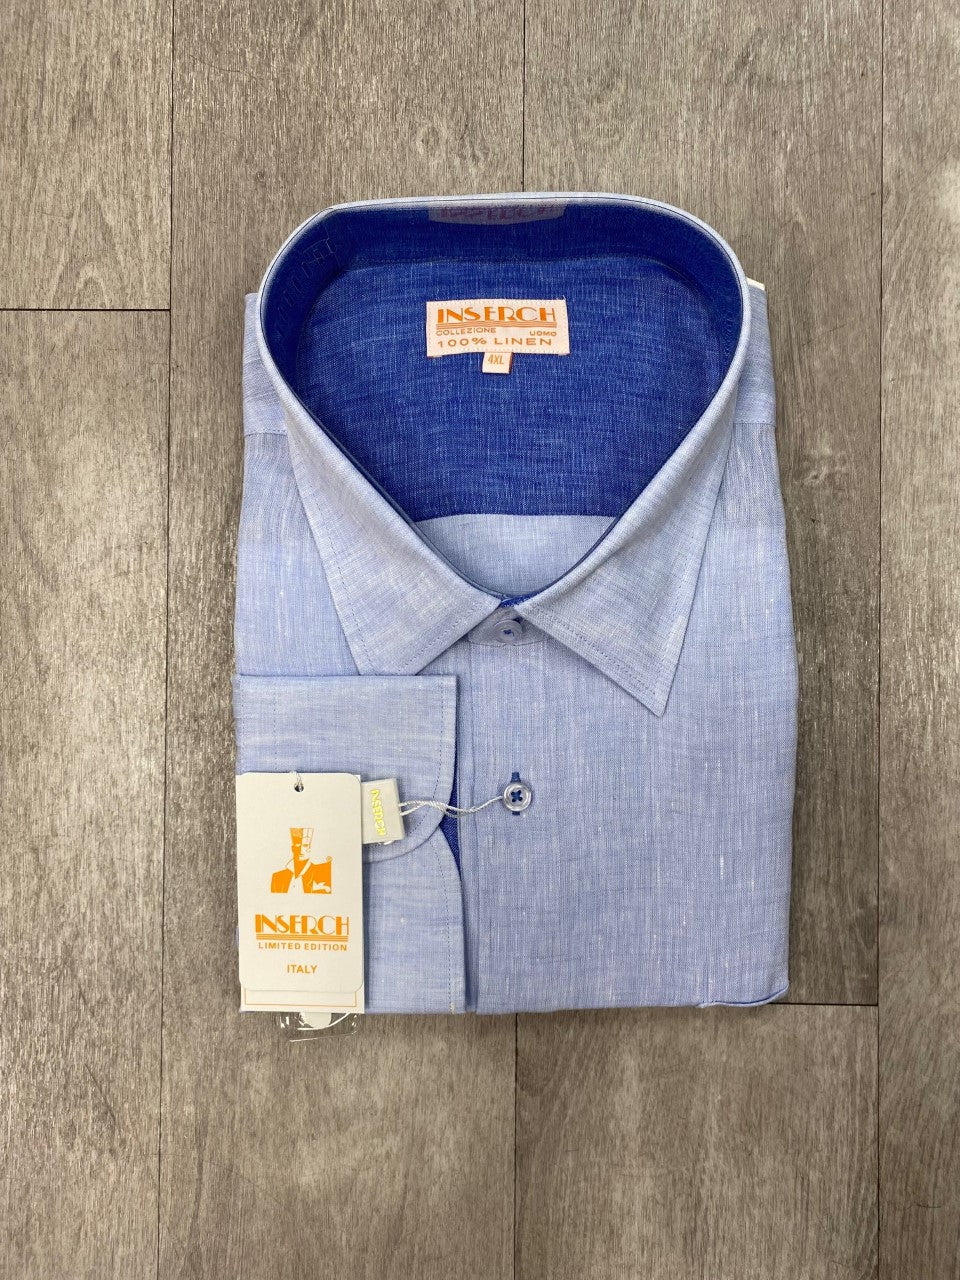 Inserch Premium Linen Yarn-Dye Solid Long Sleeve Shirt 24116-12 Sky Blue